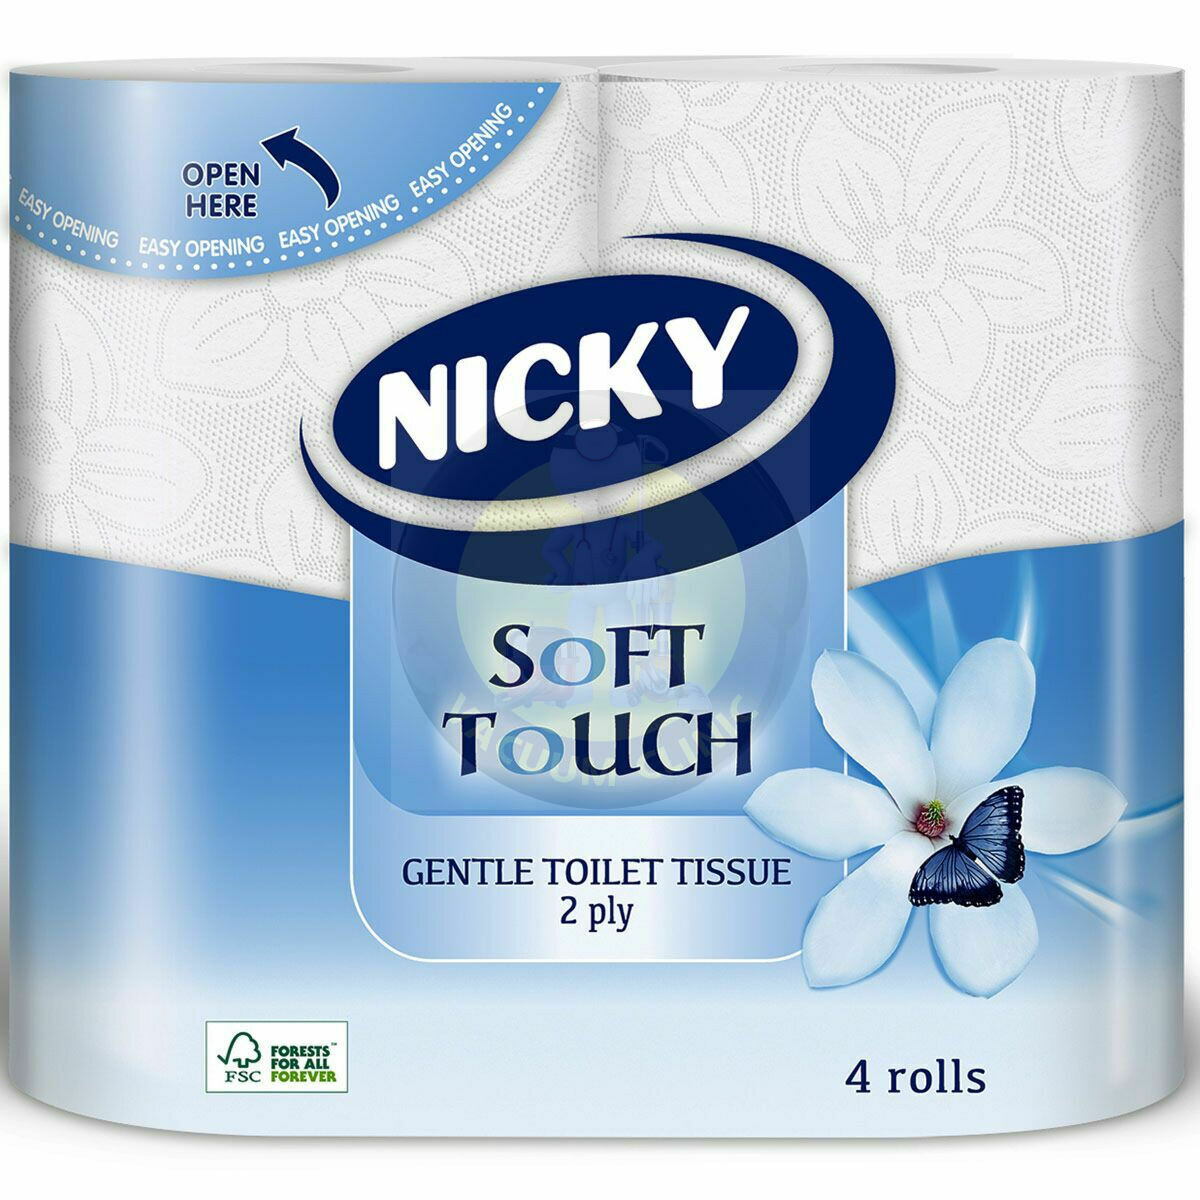 NICKY SILENT SOFT TOILET TISSUE 2PLY (4PACK) () CESROLL-NICKY